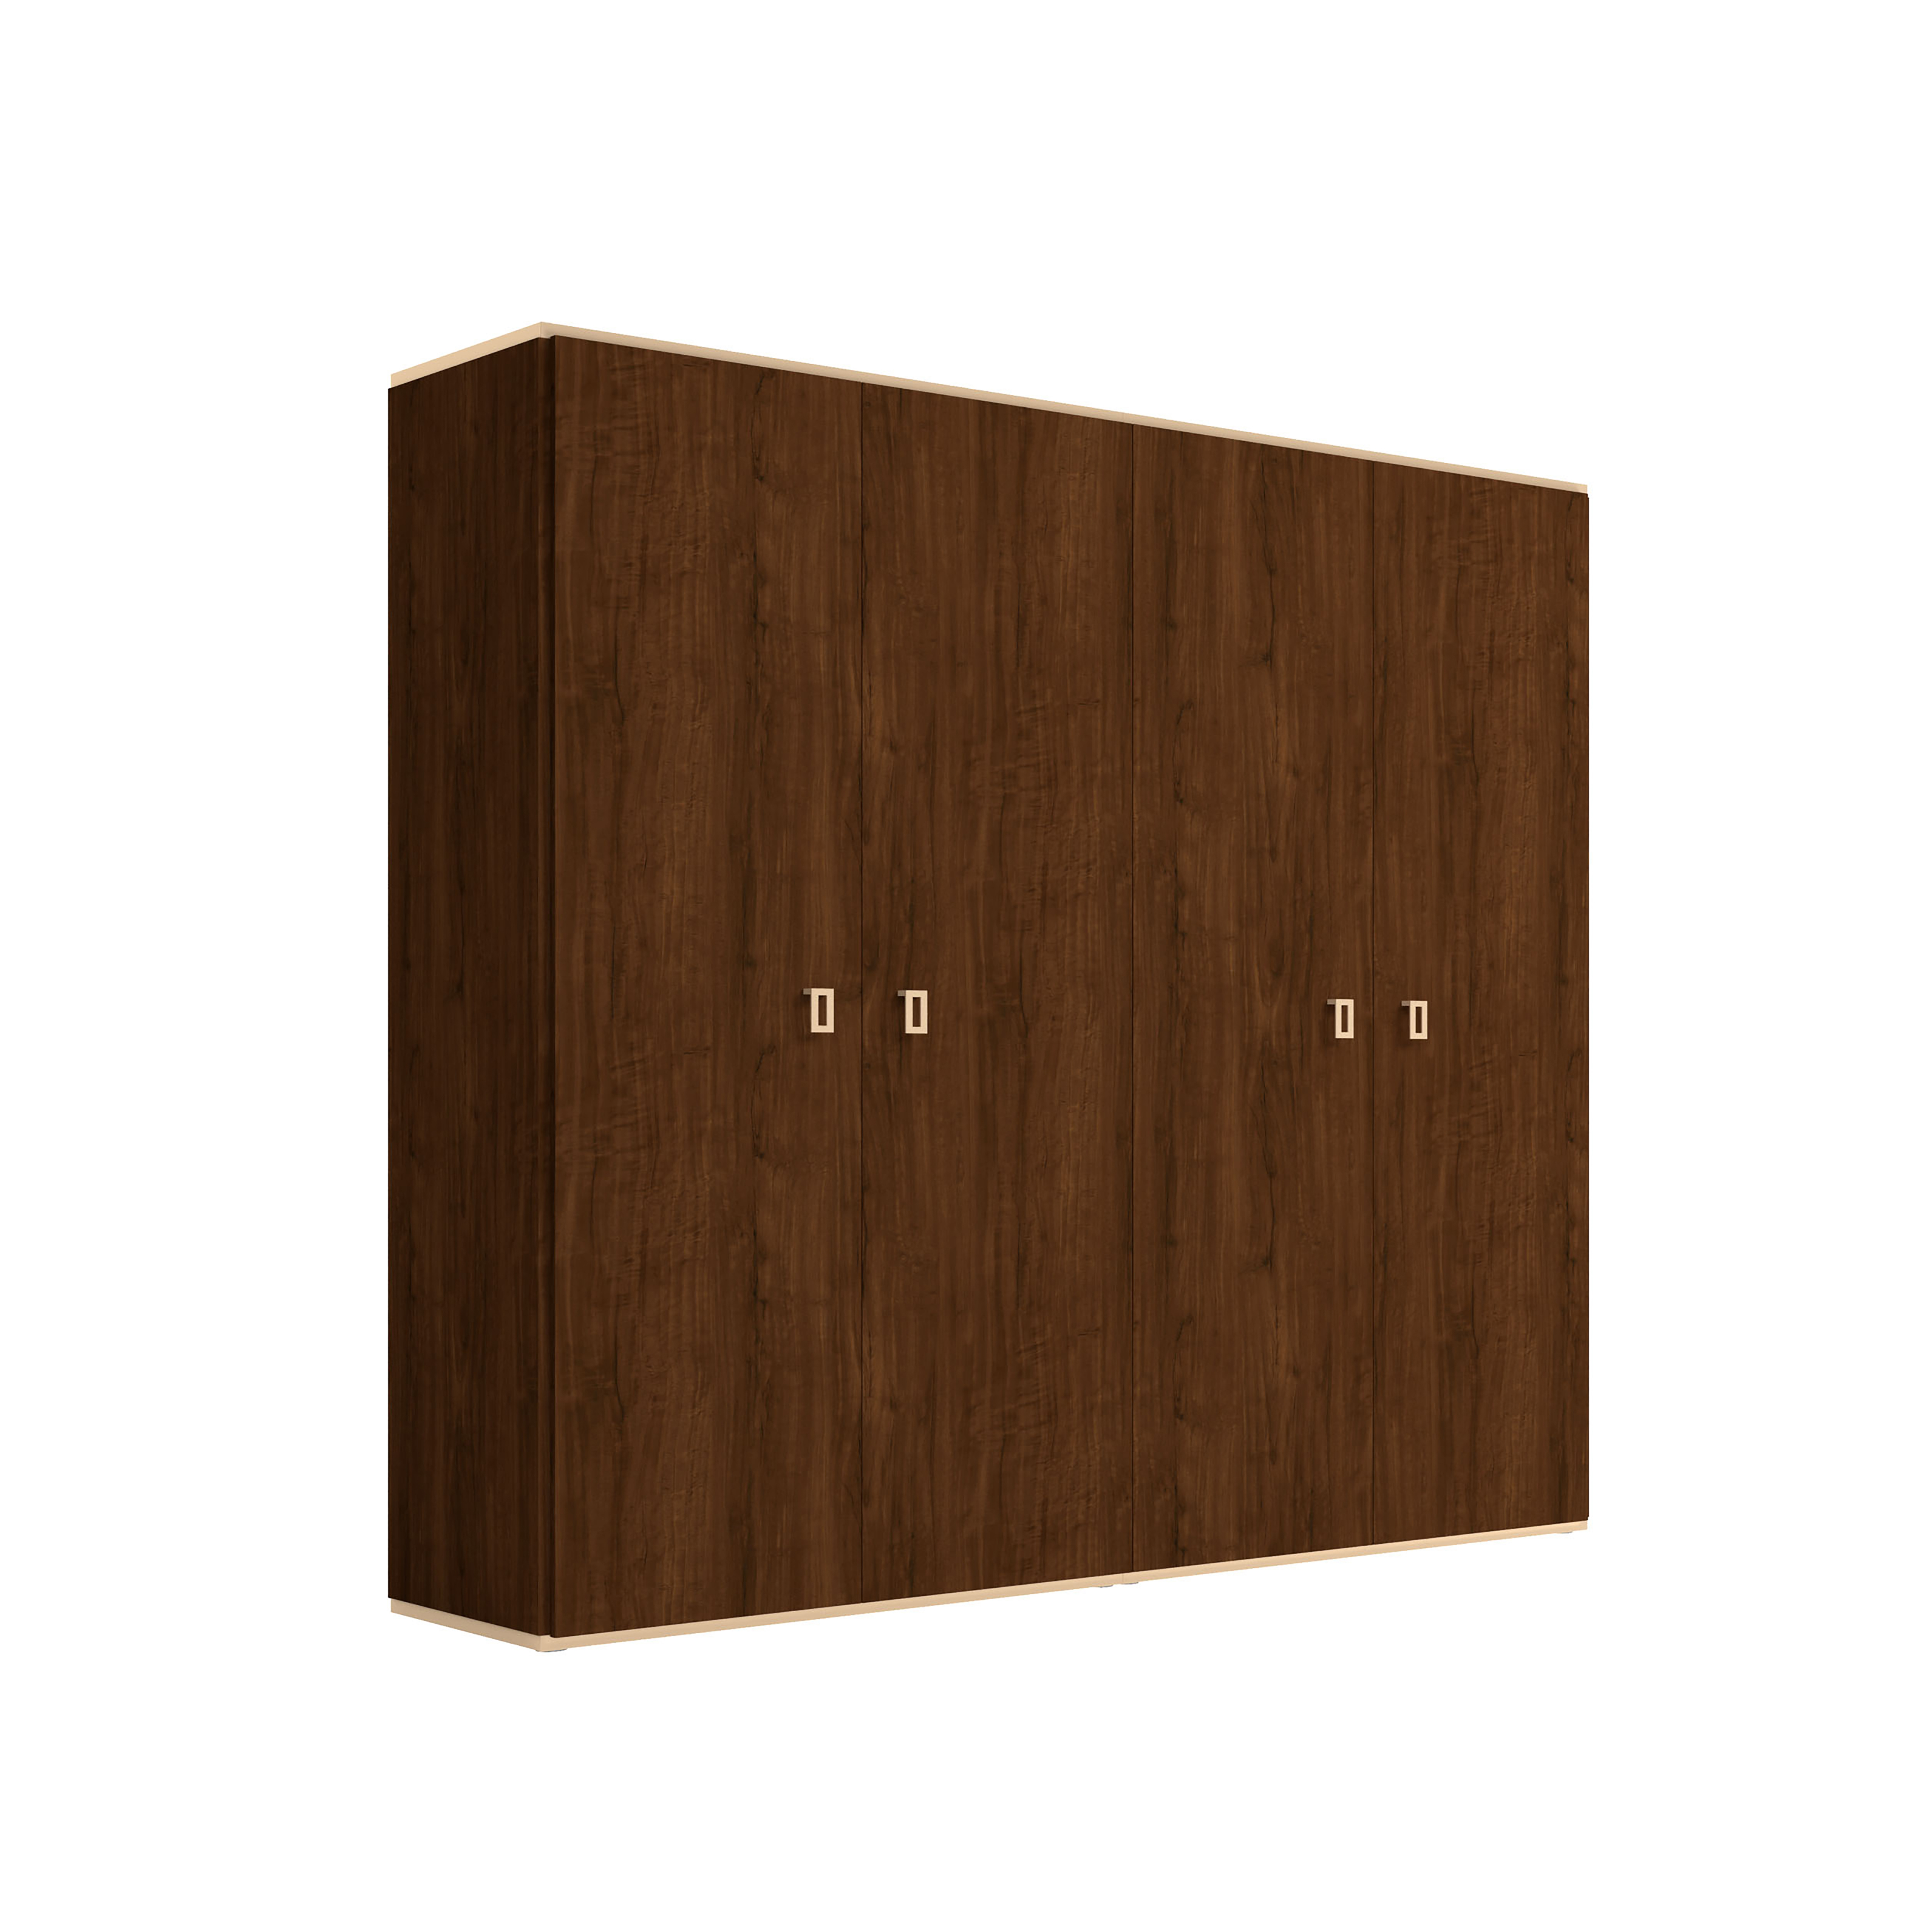 Шкаф Status Eva, четырёхдверный, цвет орех, 217x61x232 см (EABNOAR01)EABNOAR01